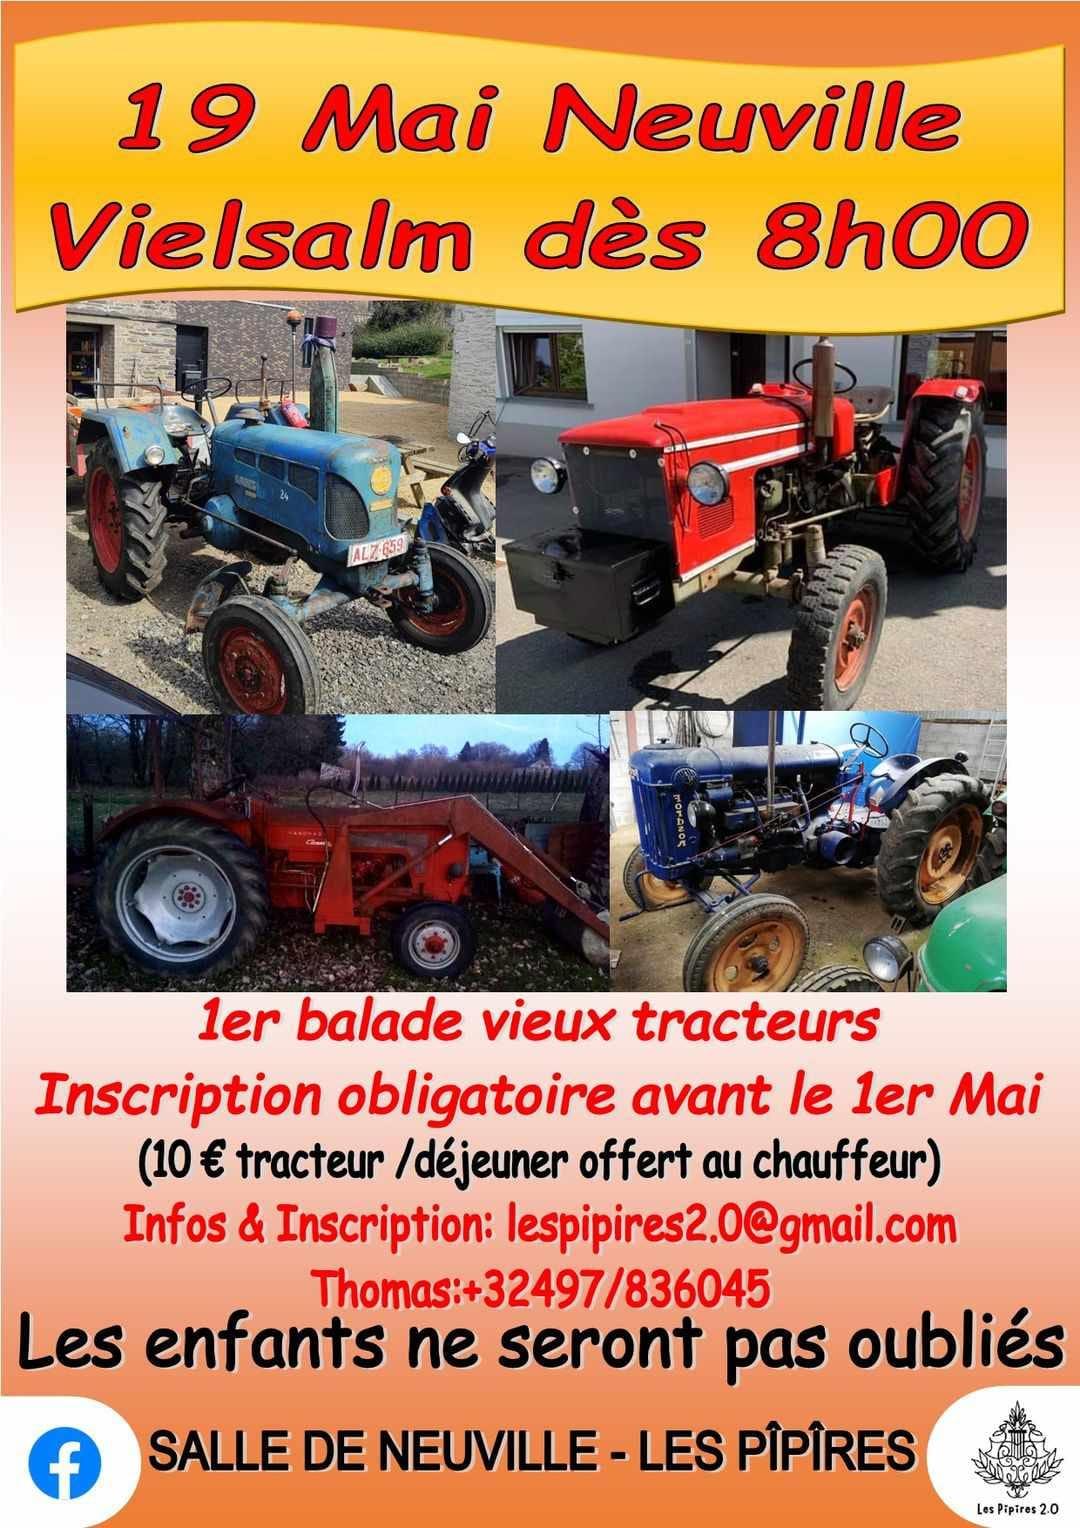 Balade des vieux tracteurs à Neuville